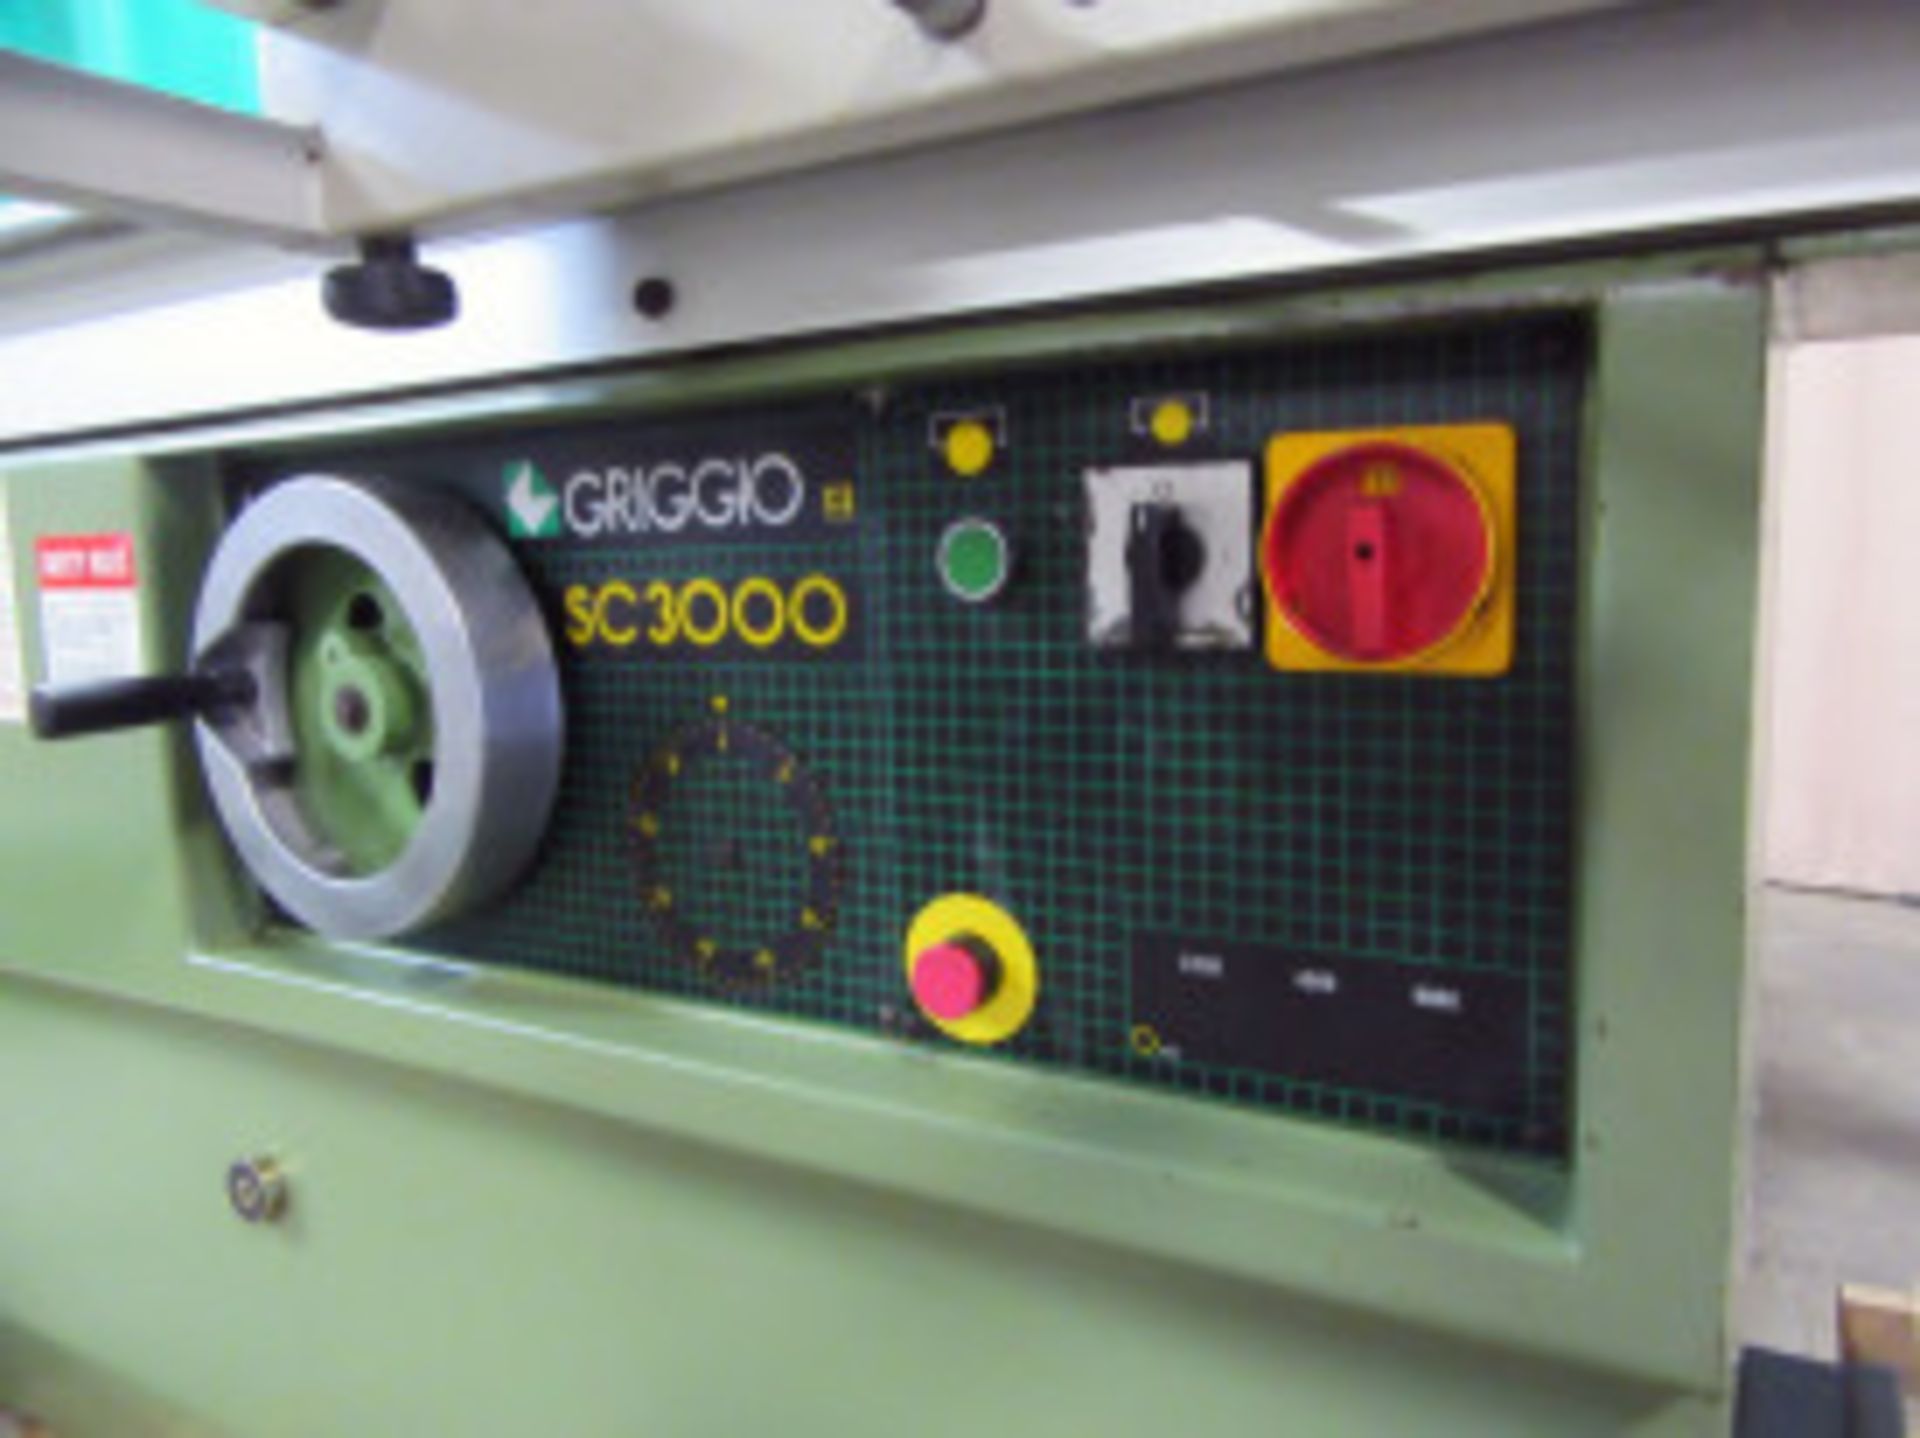 (8153) Griggio Model SC-3000 sliding table saw - Image 8 of 10